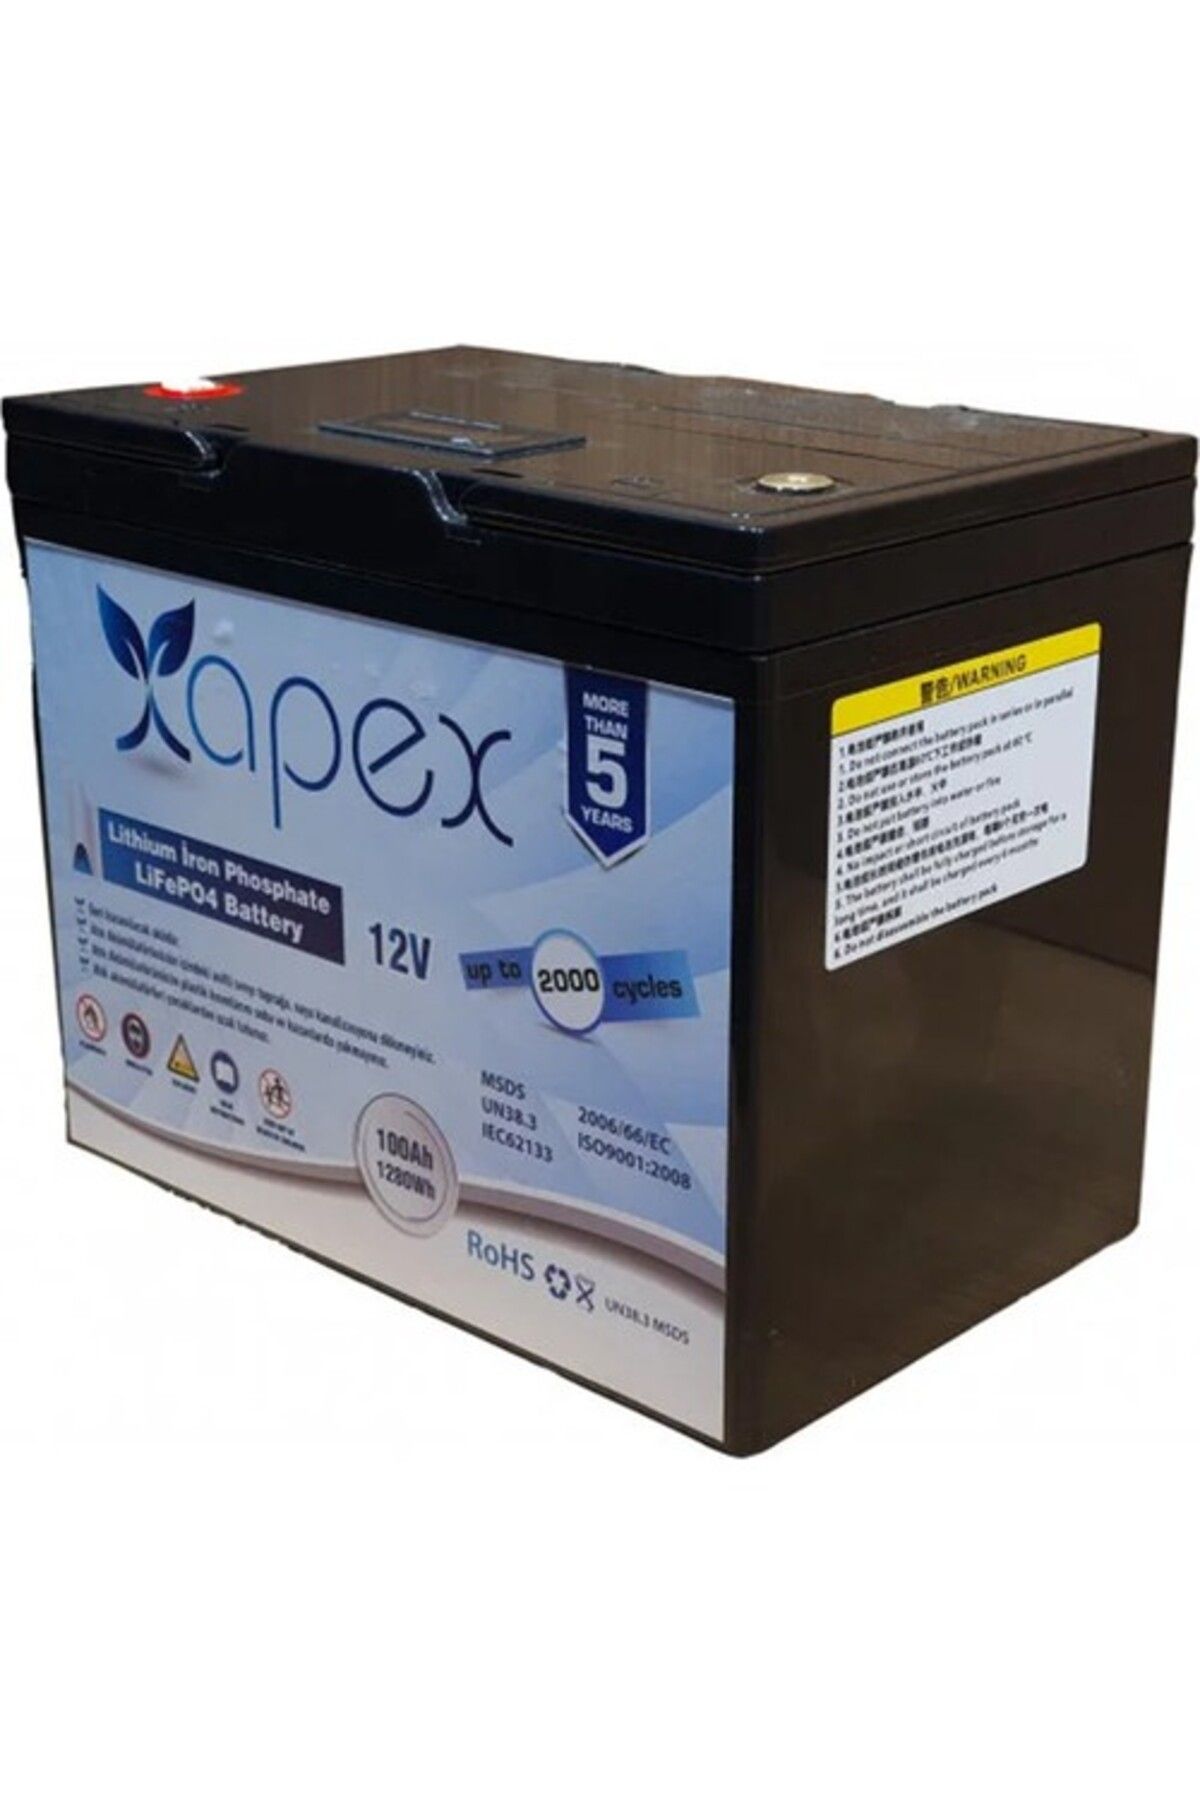 Apex Lityum Akü 12V 150 Ah